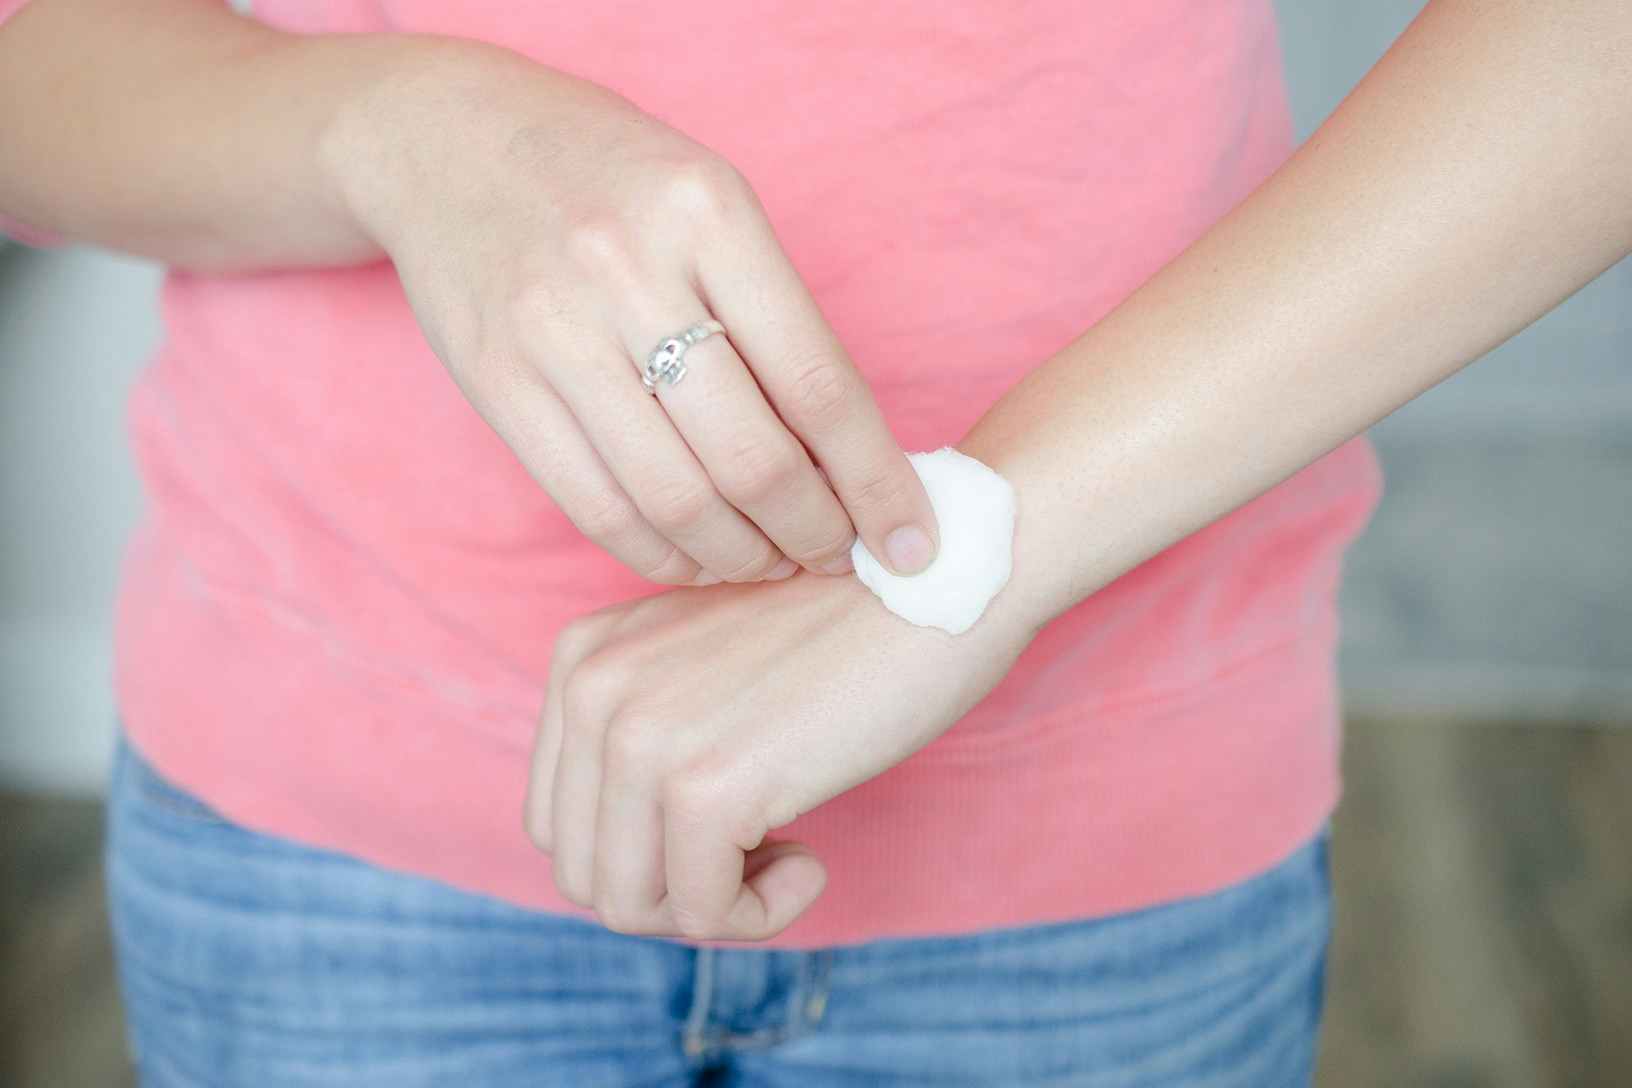 A person rubbing a cotton ball on their wrist.